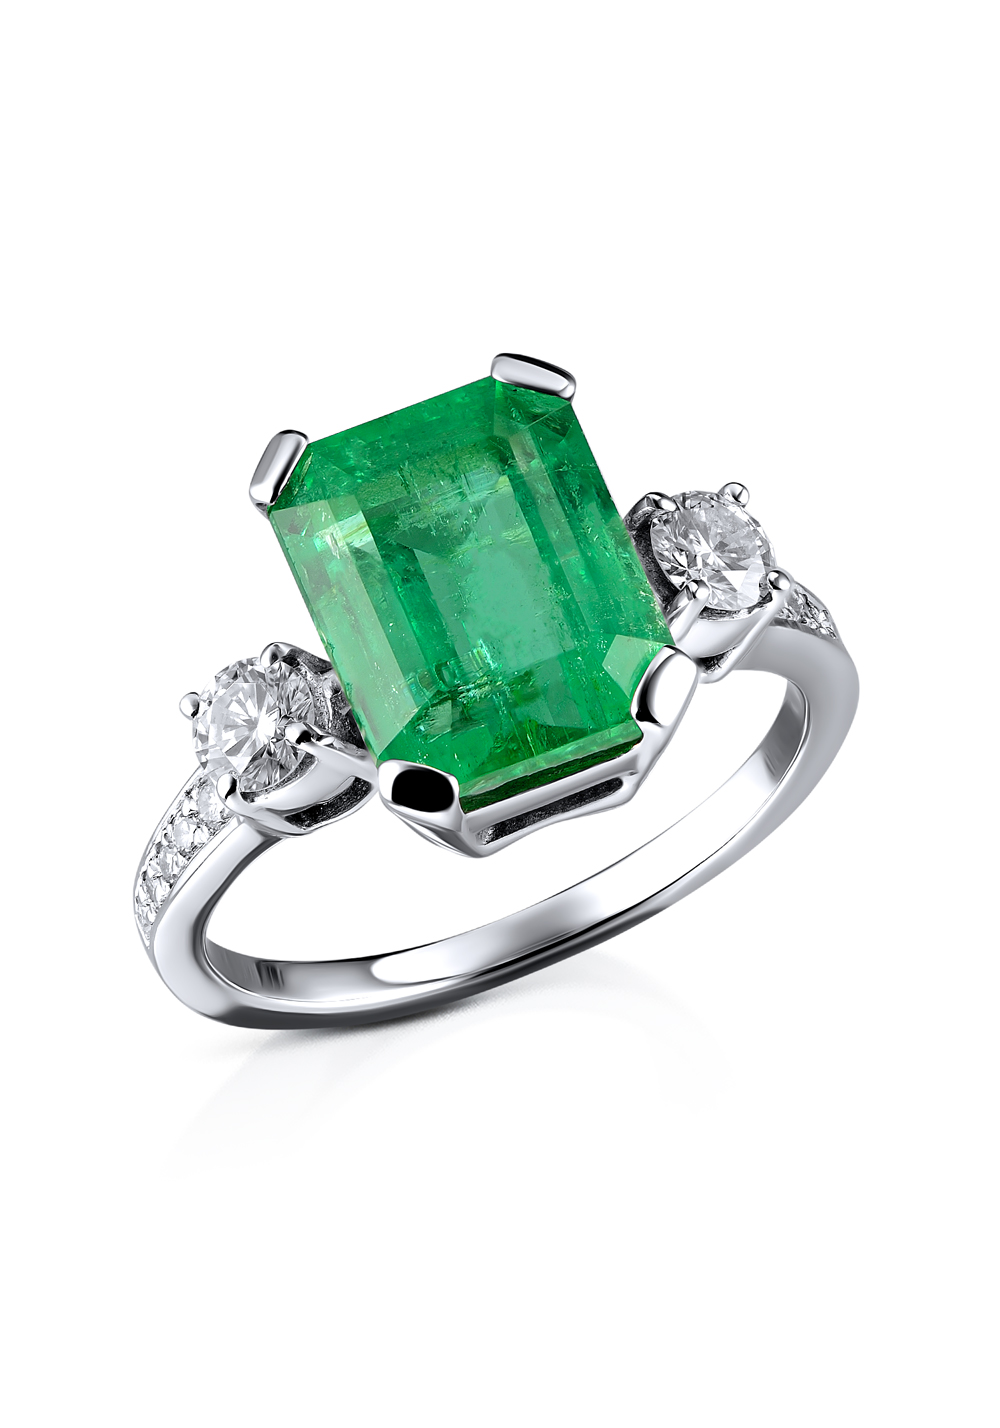 Кольцо No name с изумрудом 3,60 ct Intense Green и бриллиантами(12674) №5